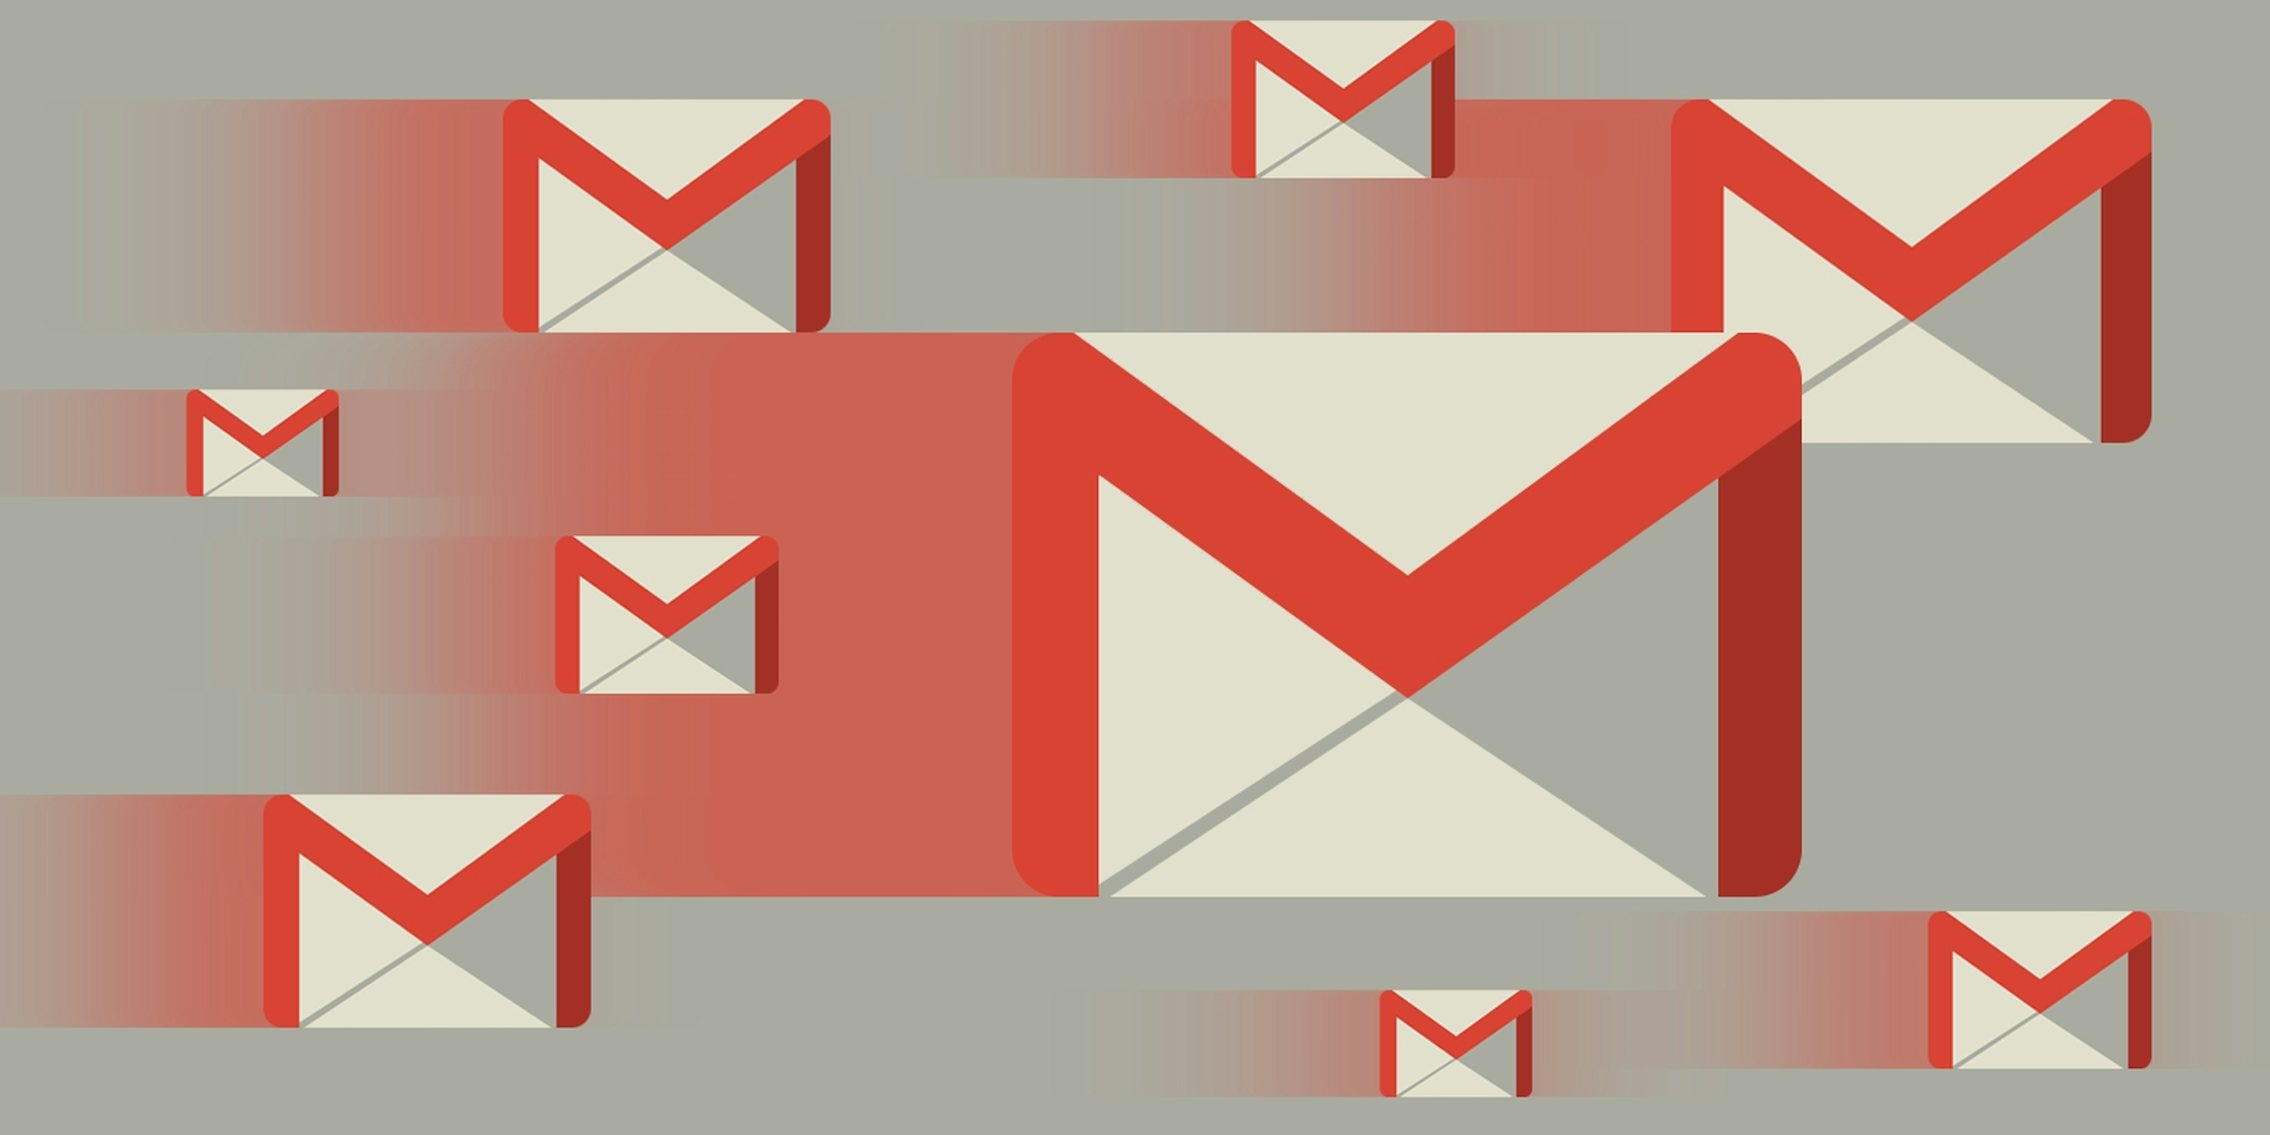 L gmail com. Gmail почта. Gmail картинка. Почтовый сервис gmail.